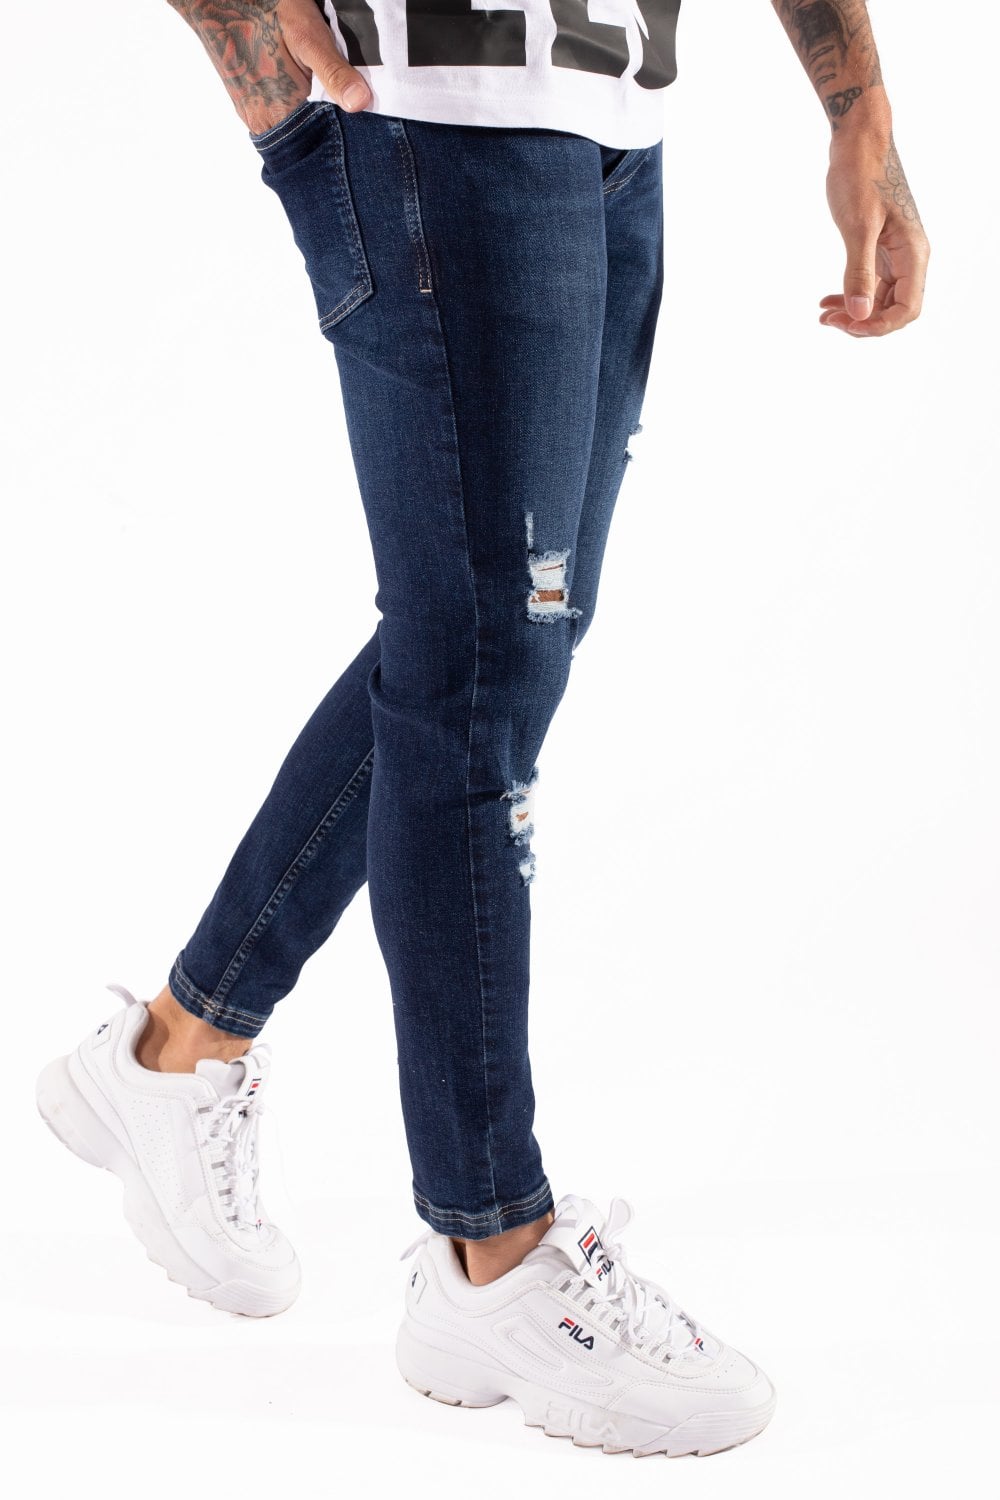 11 Degrees Super Stretch Distressed Skinny Jeans - Indigo Blue